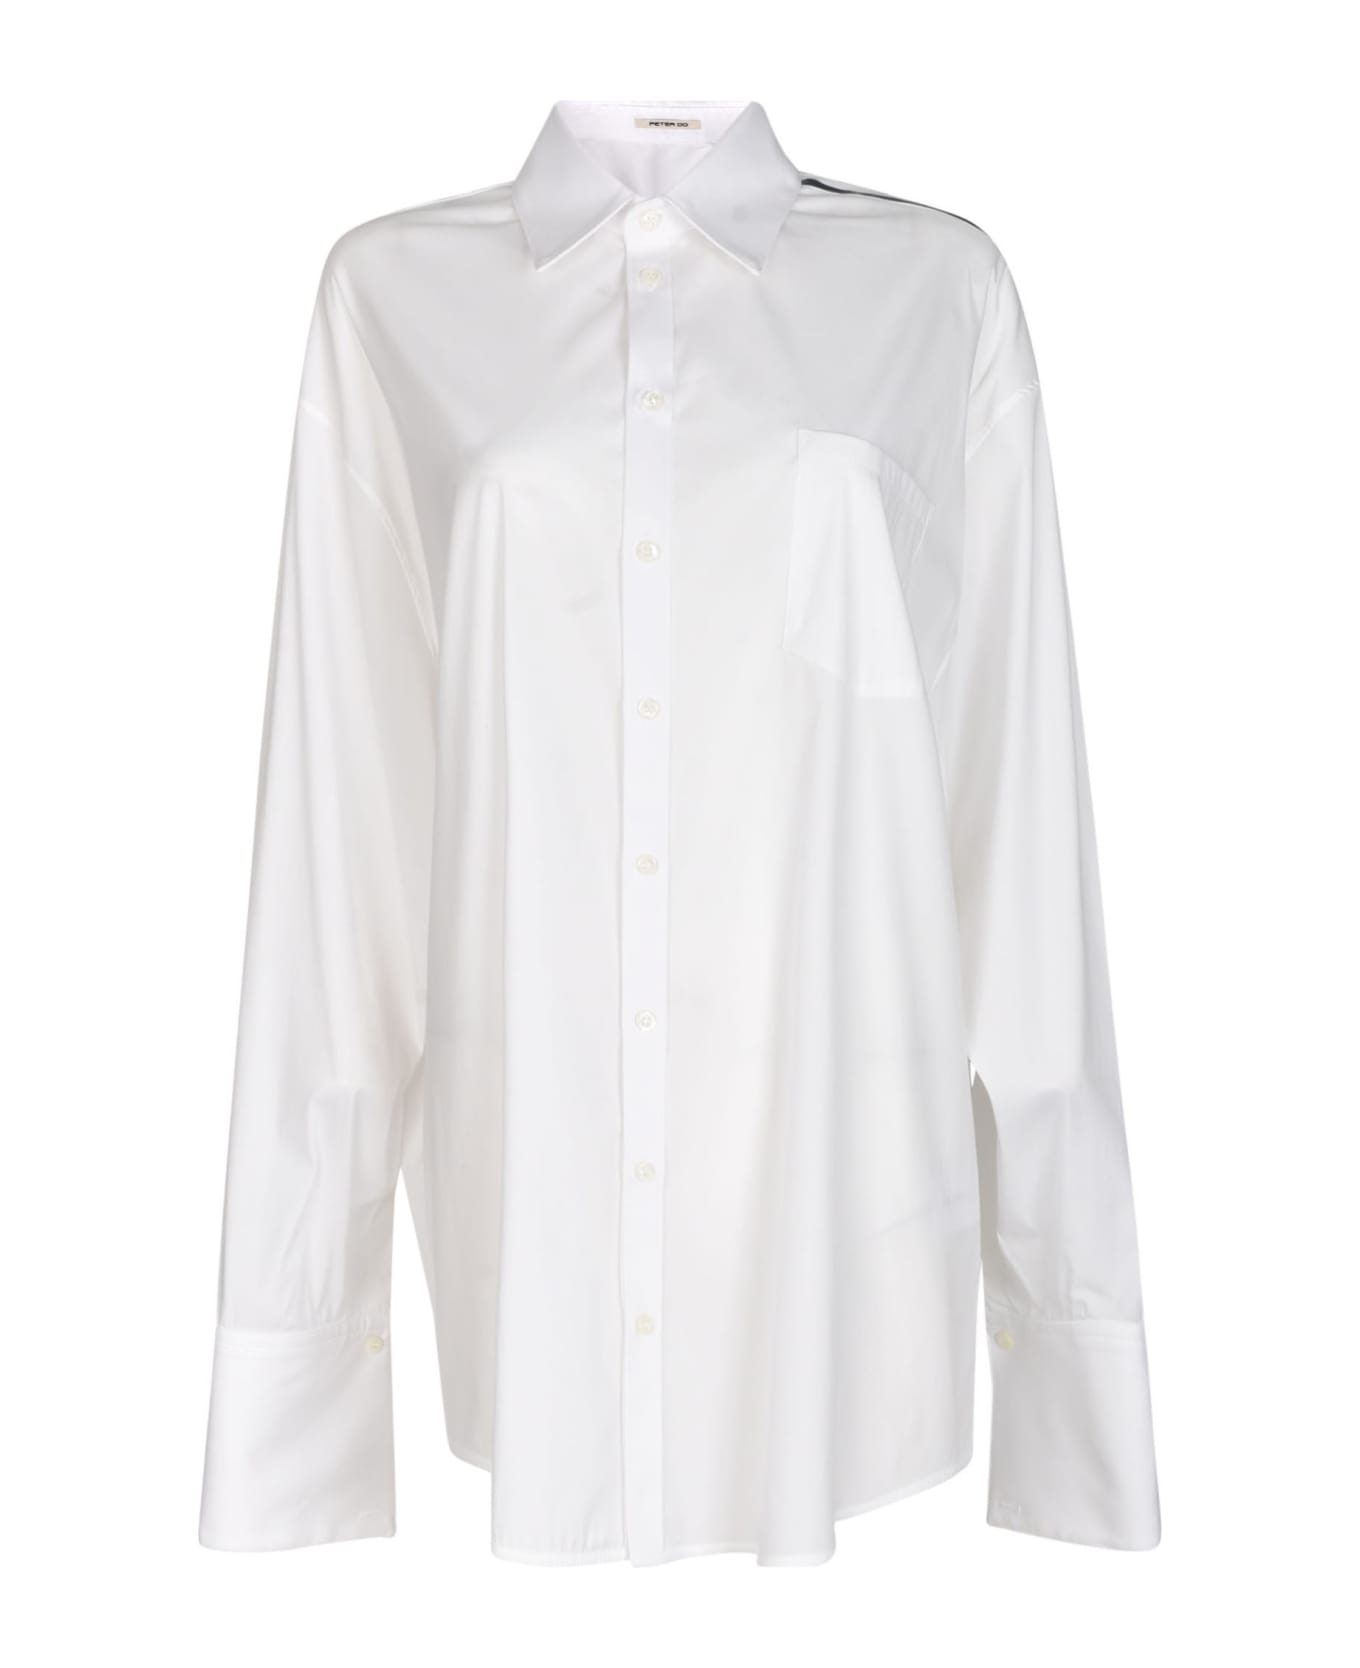 Peter Do Peter Shirt - White シャツ